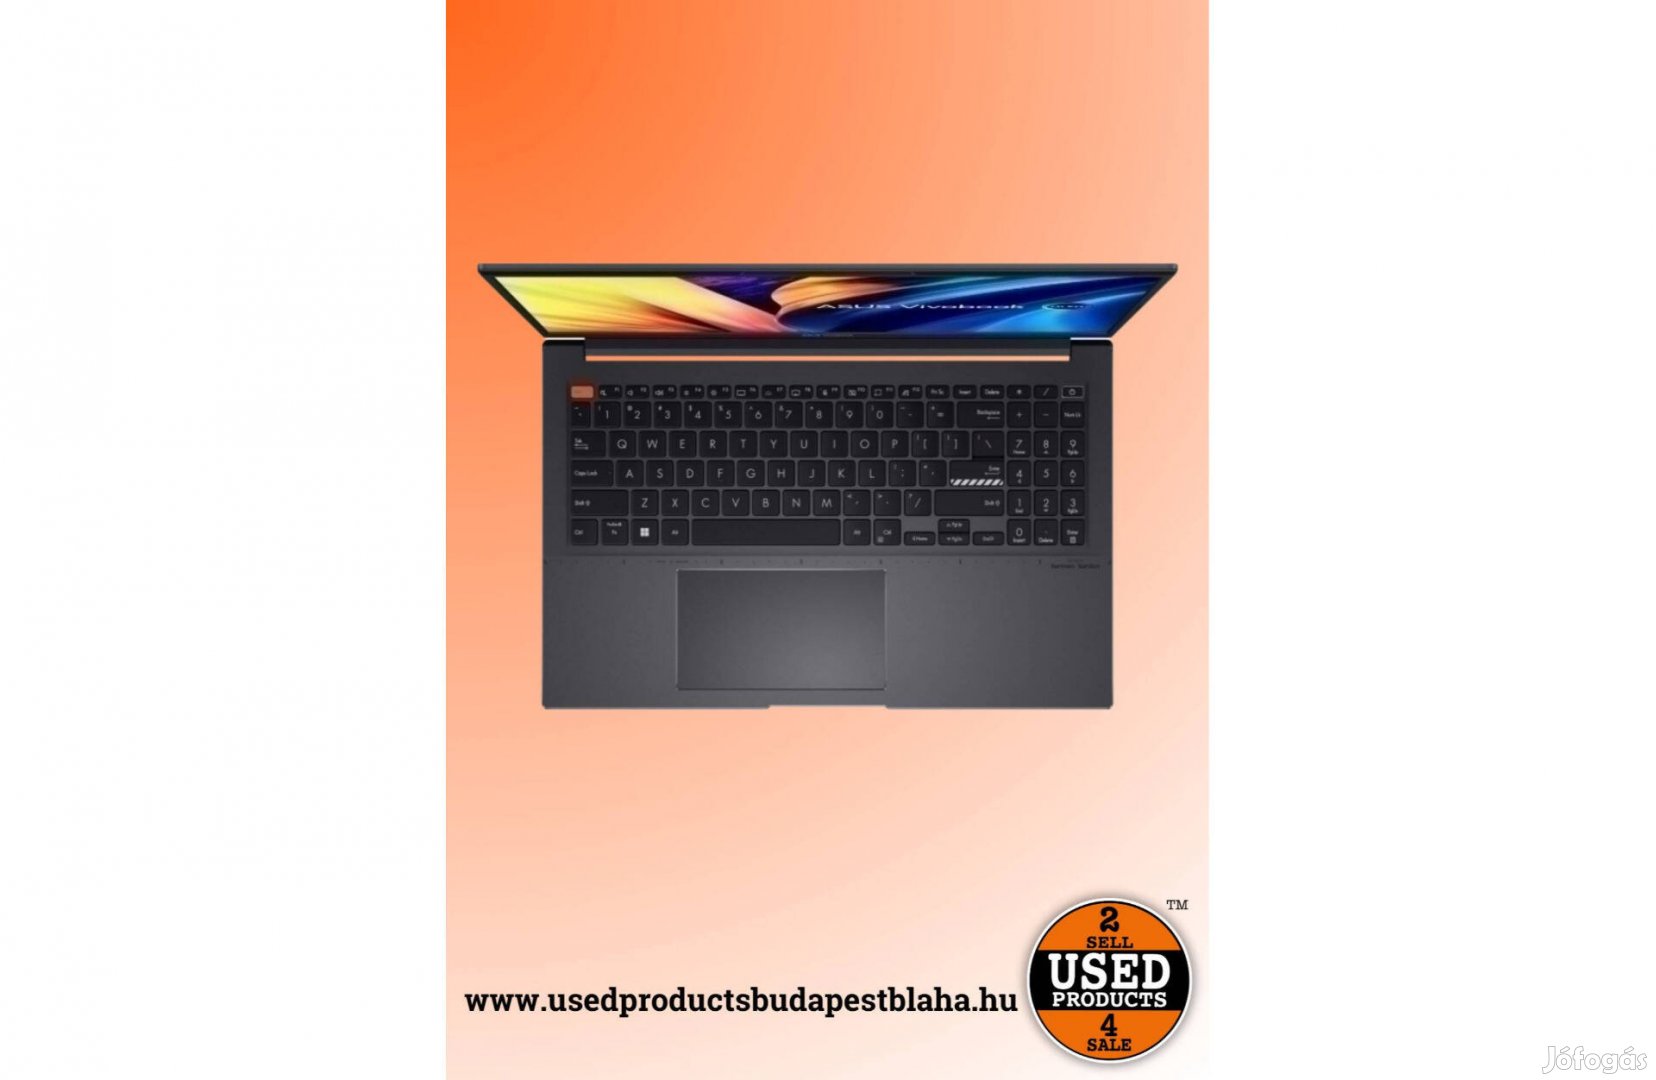 Asus Vivobook S 15 Laptop | Used Products Budapest Blaha